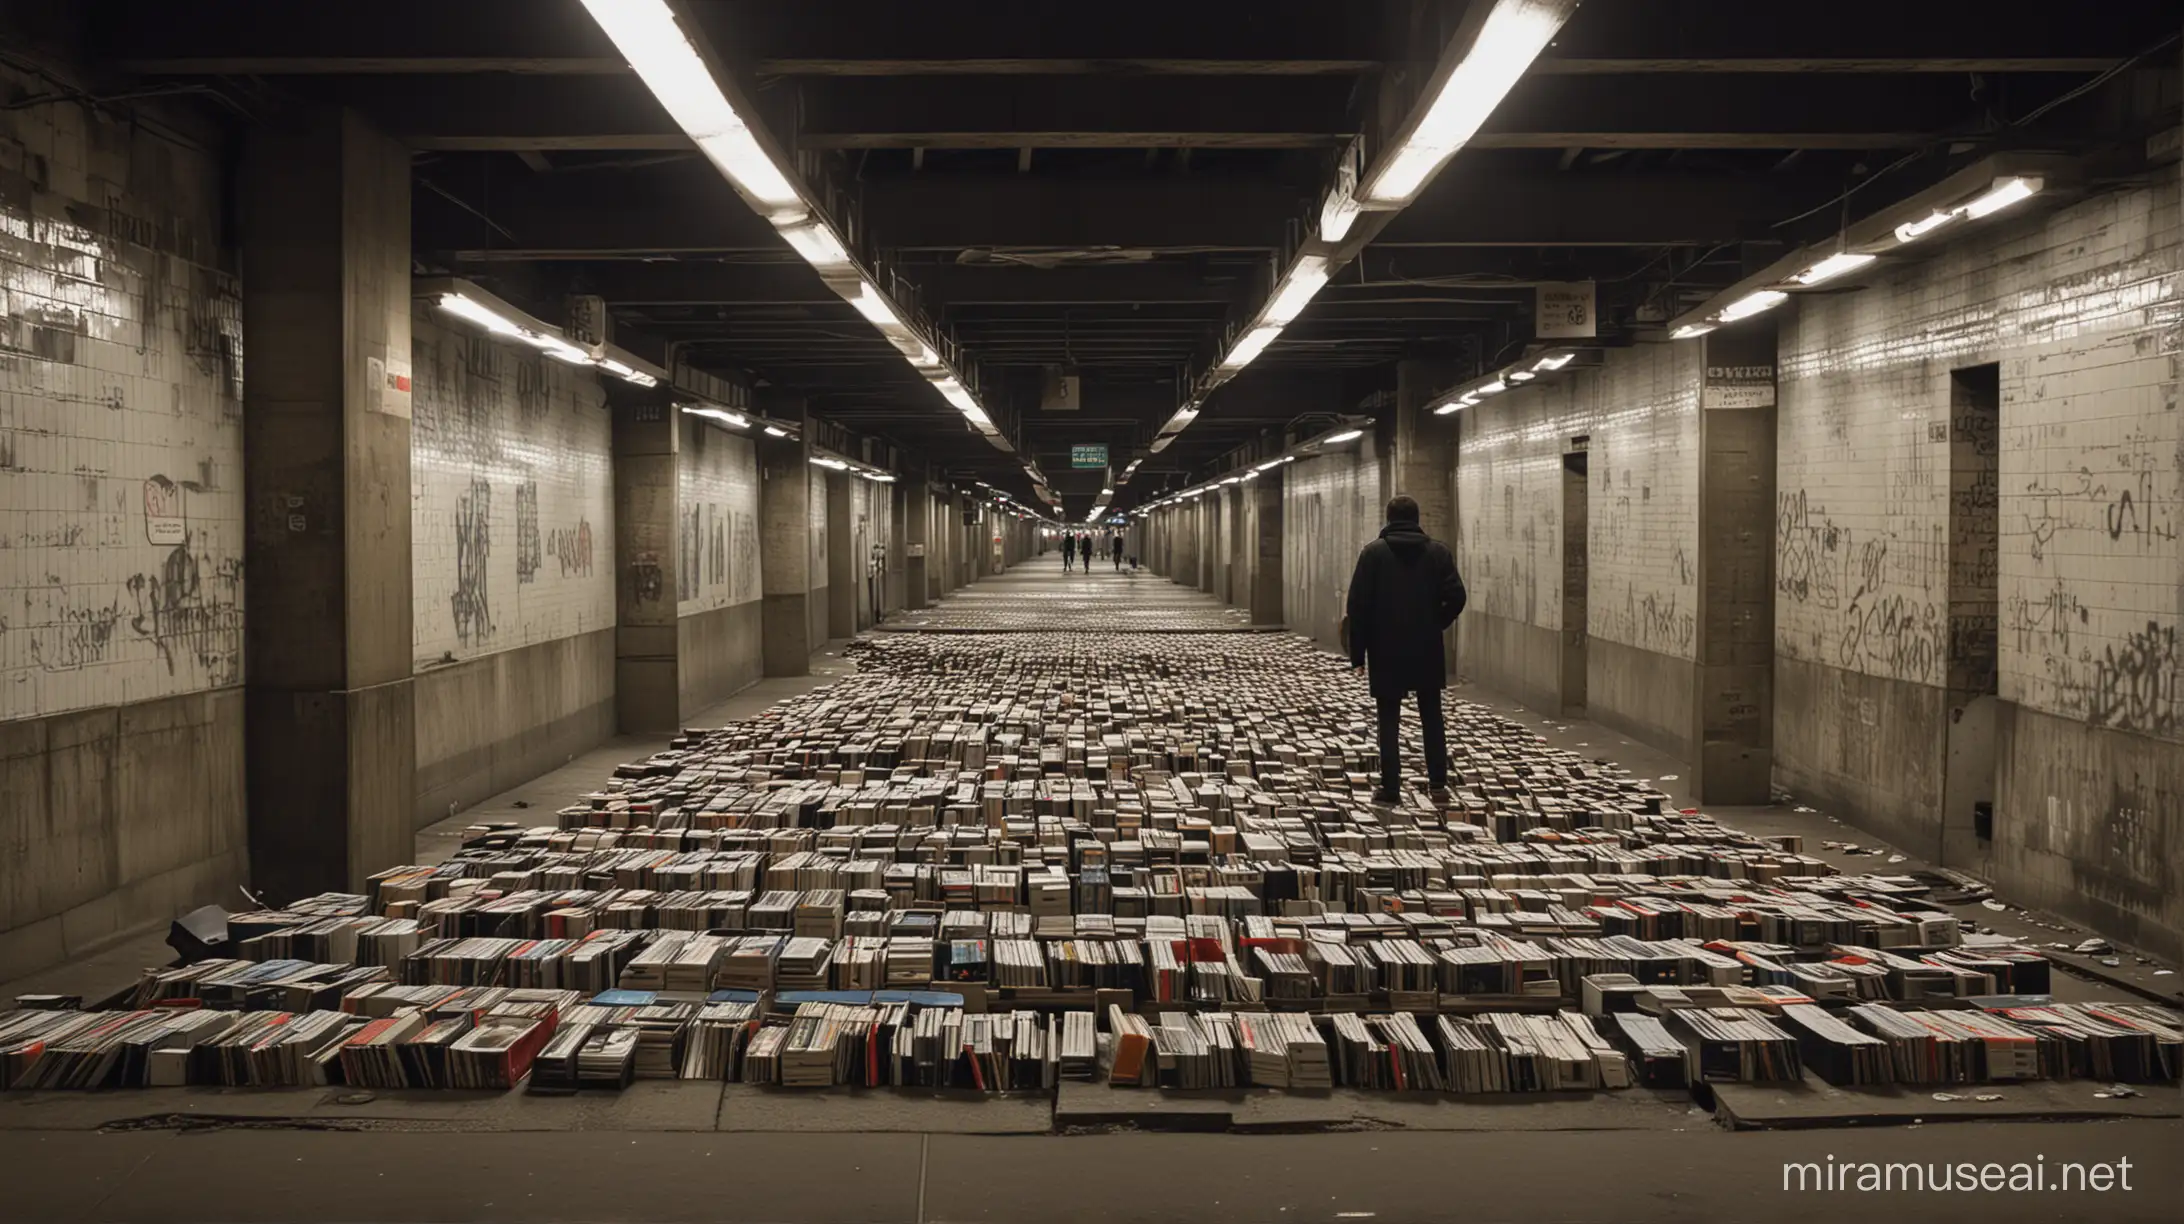 Urban Scene Under Elevated Subway Tracks with Infinite Shelf of Records